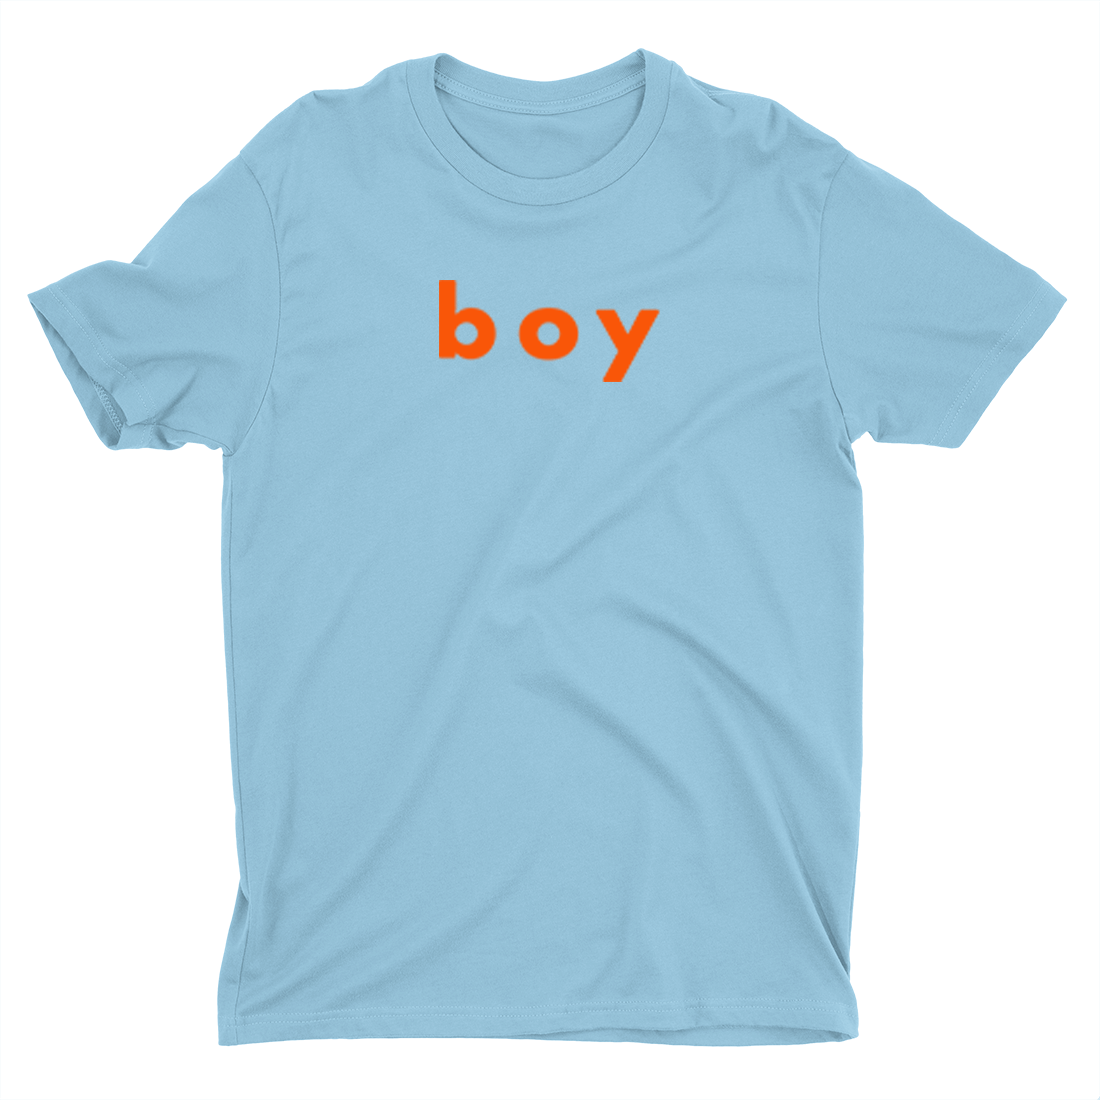 The Killers - Light Blue  "boy" T-Shirt